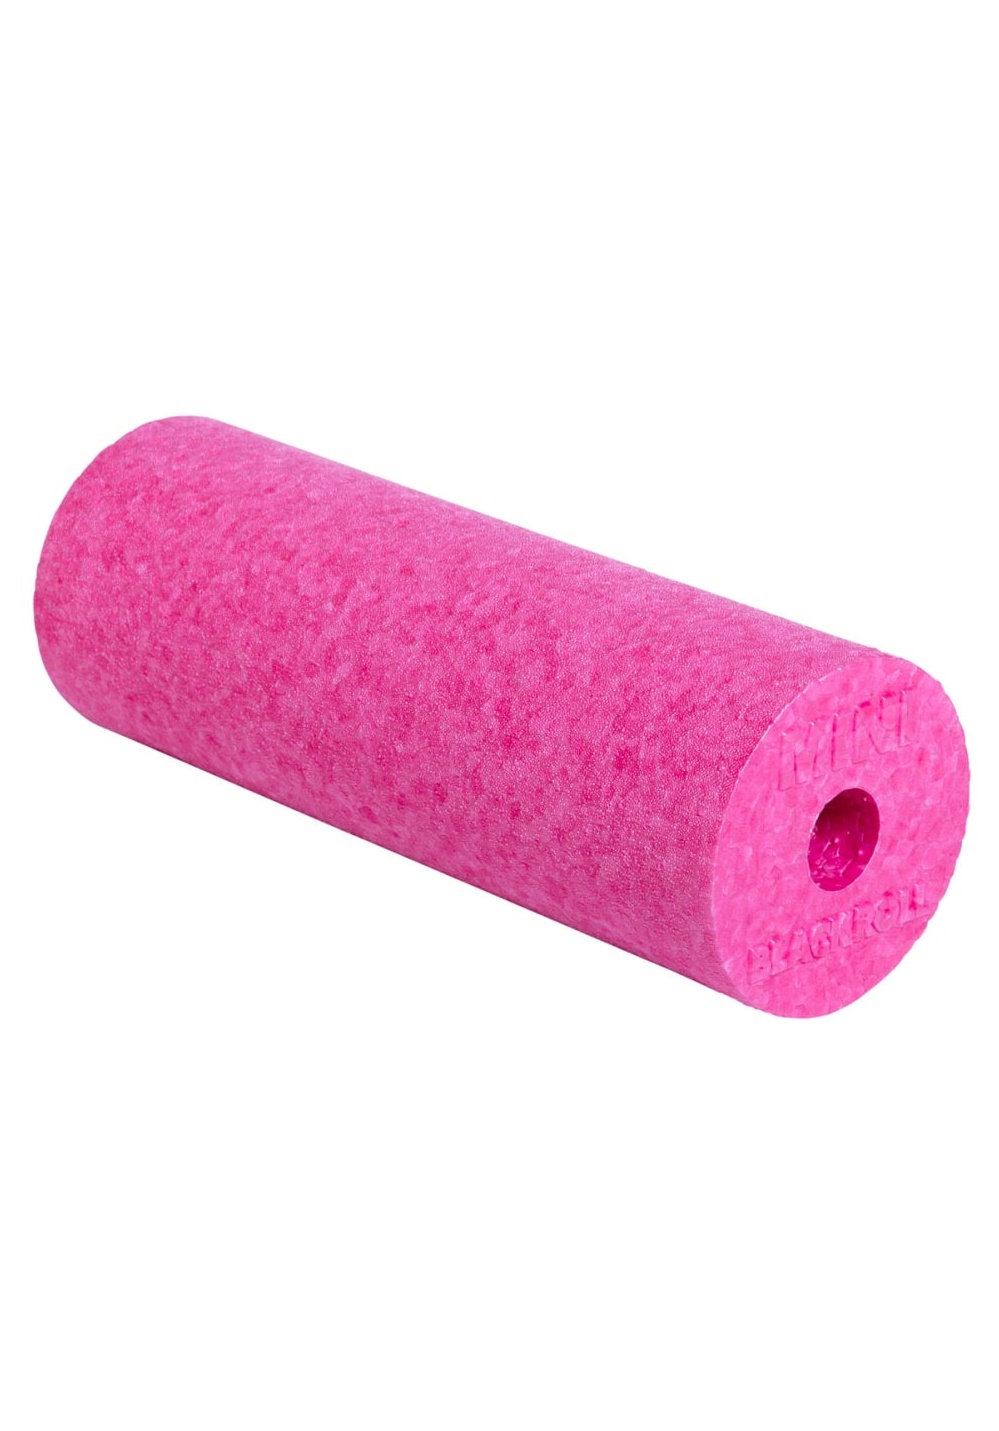 Bild von Fitnesszubehoer Mini Roll pink LA-5543